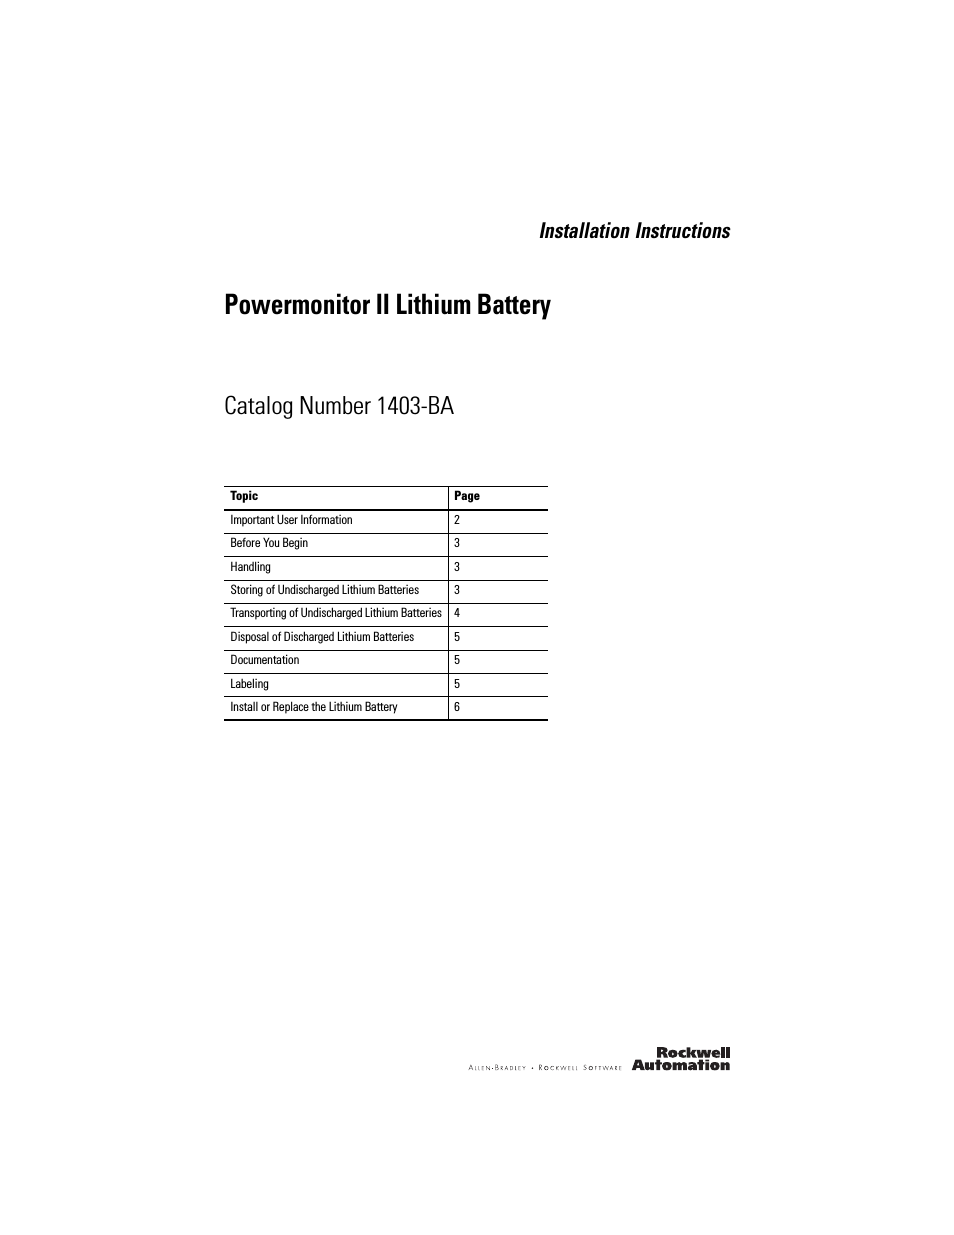 1403-BA Powermonitor II Lithium Battery Installation Instructions